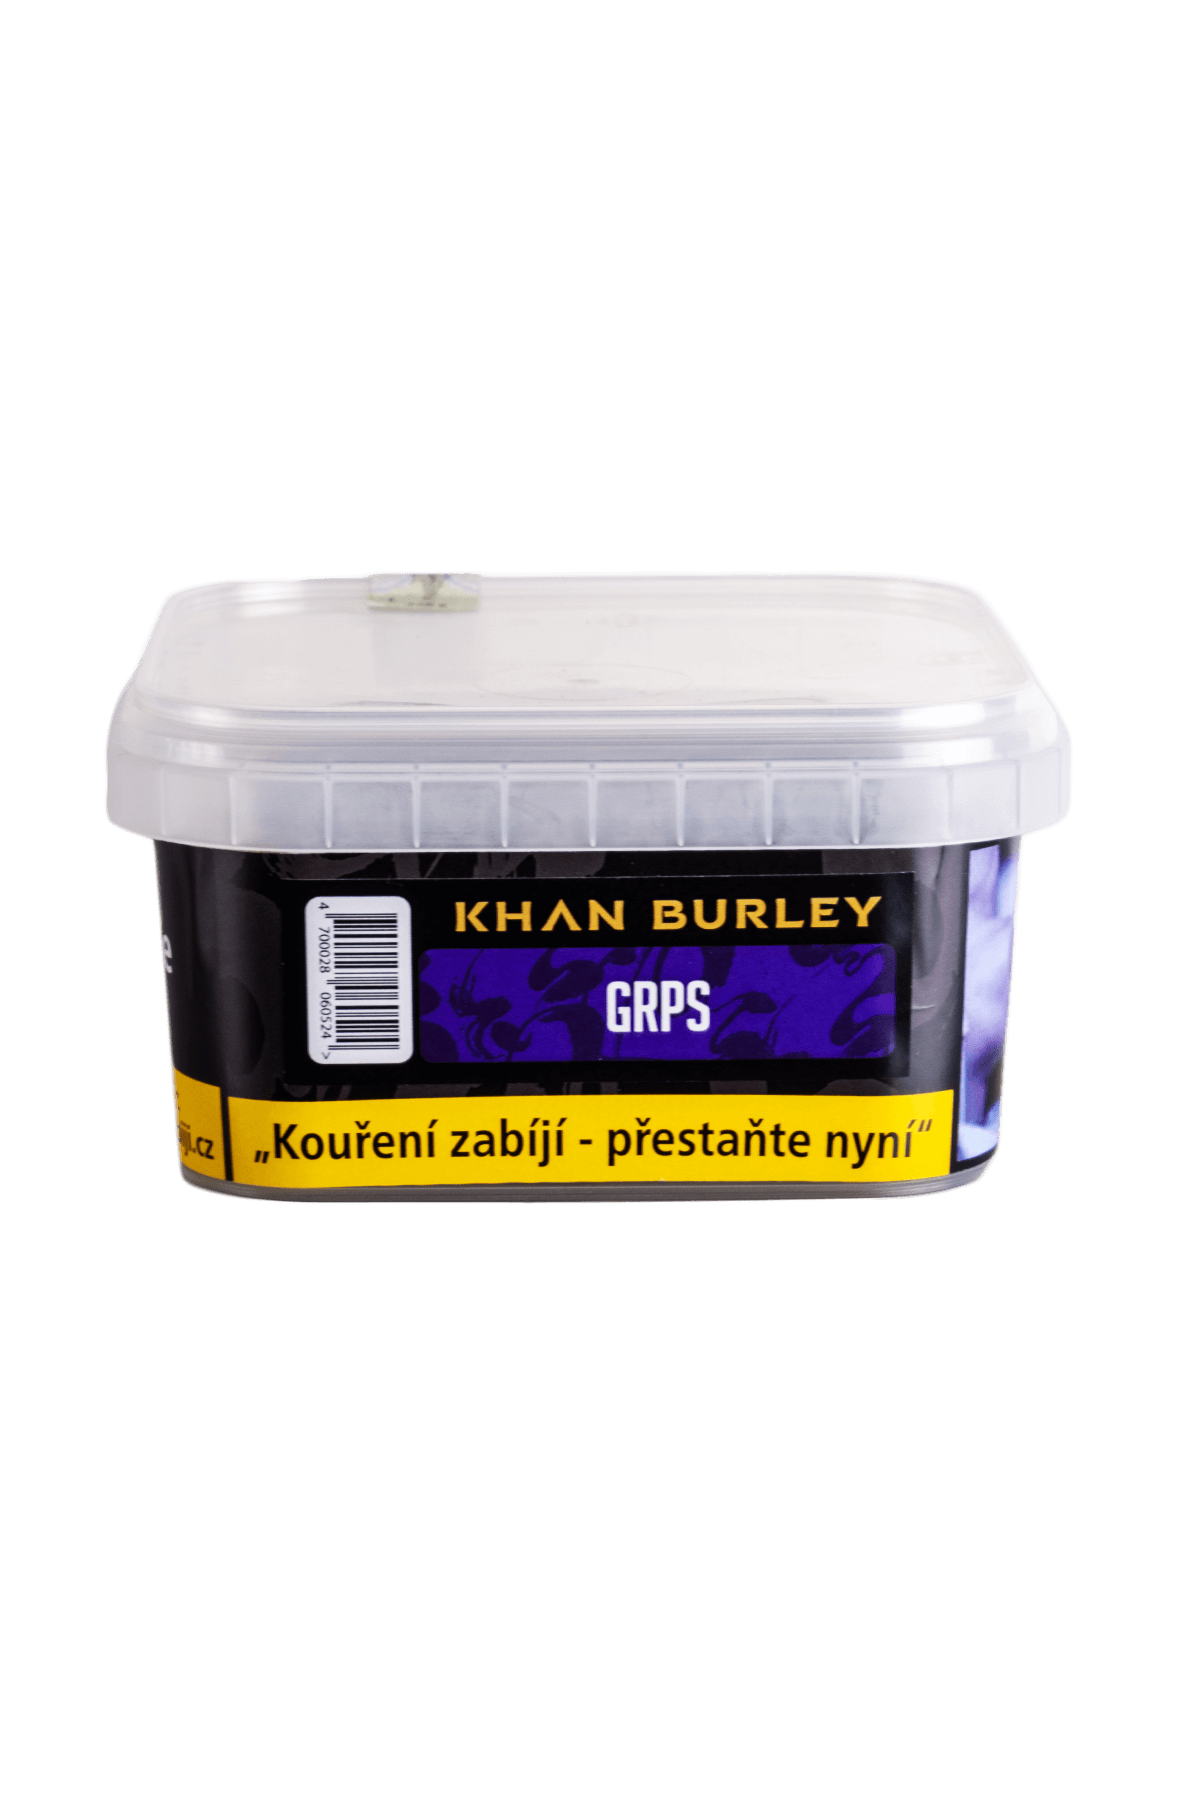 Tabák - Khan Burley 250g - Grapes